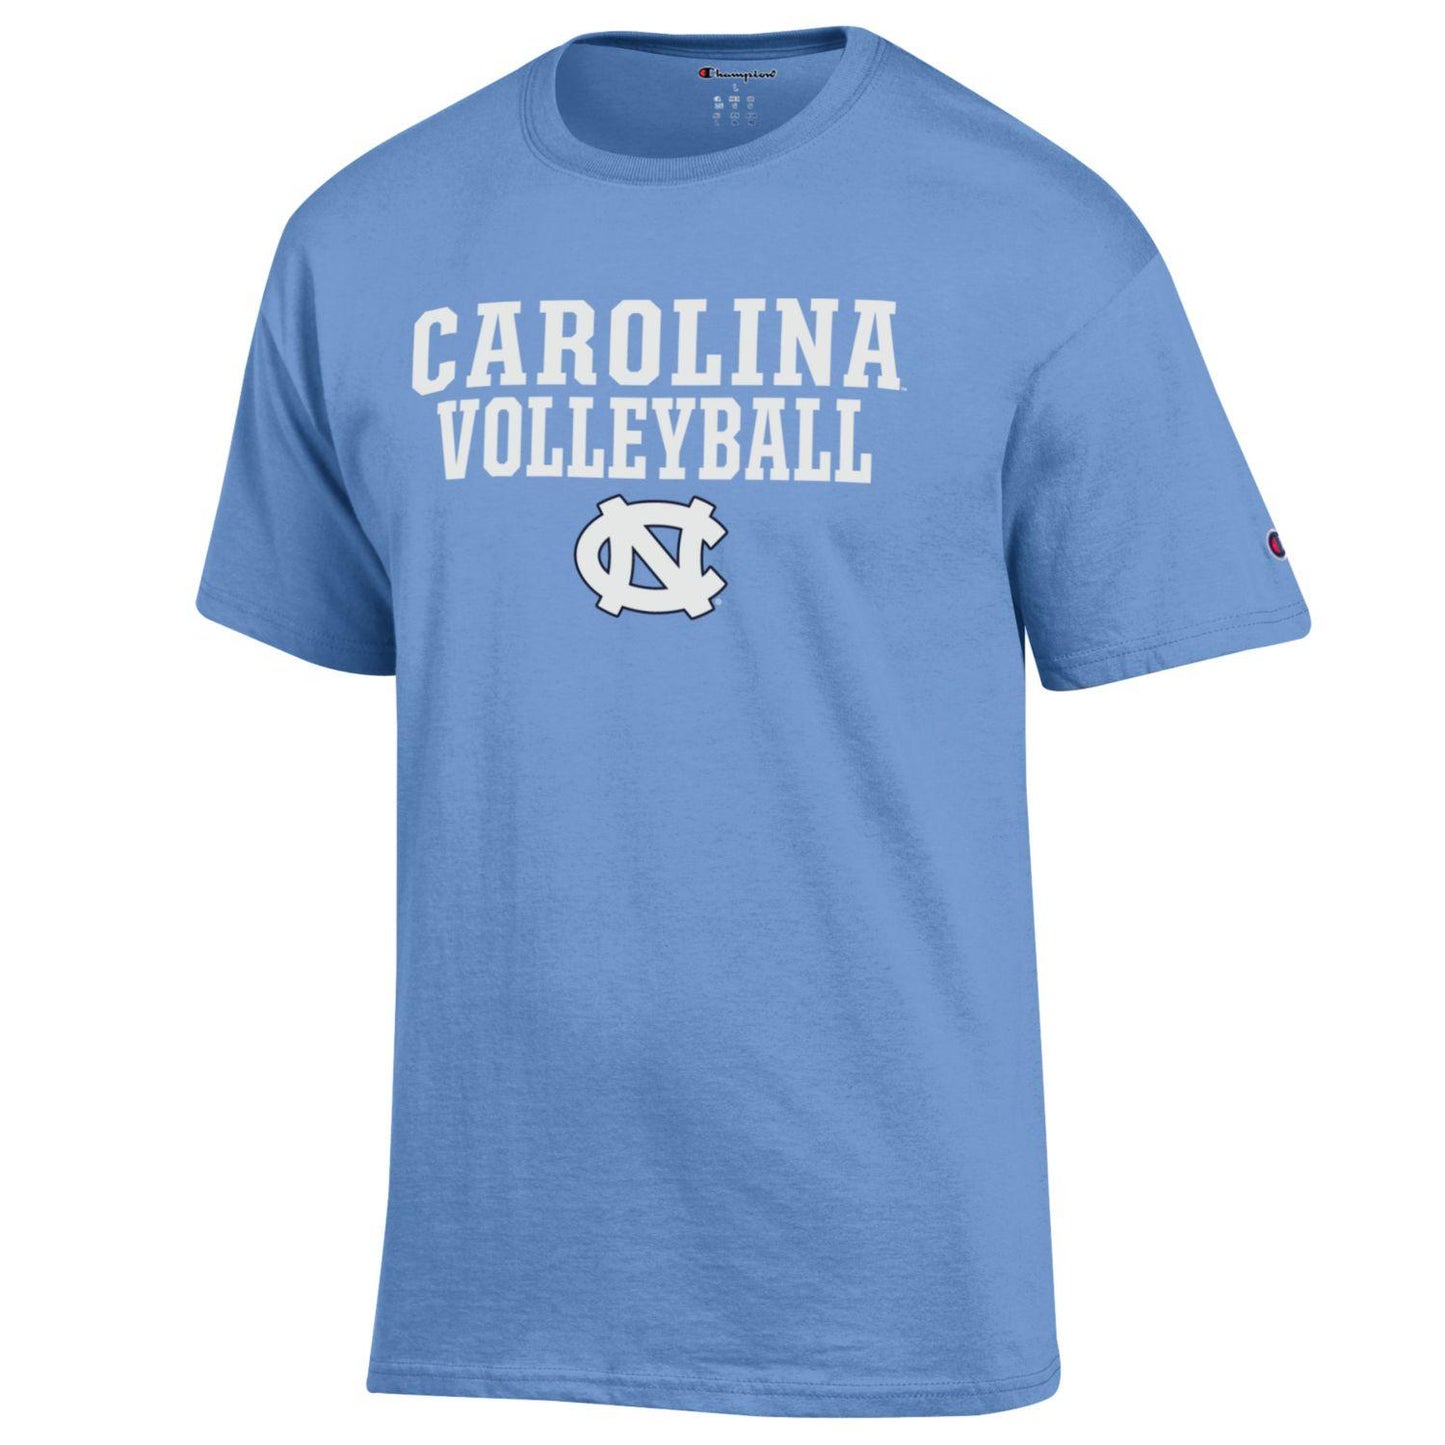 Carolina Volleyball T-Shirt with UNC Logo by Champion